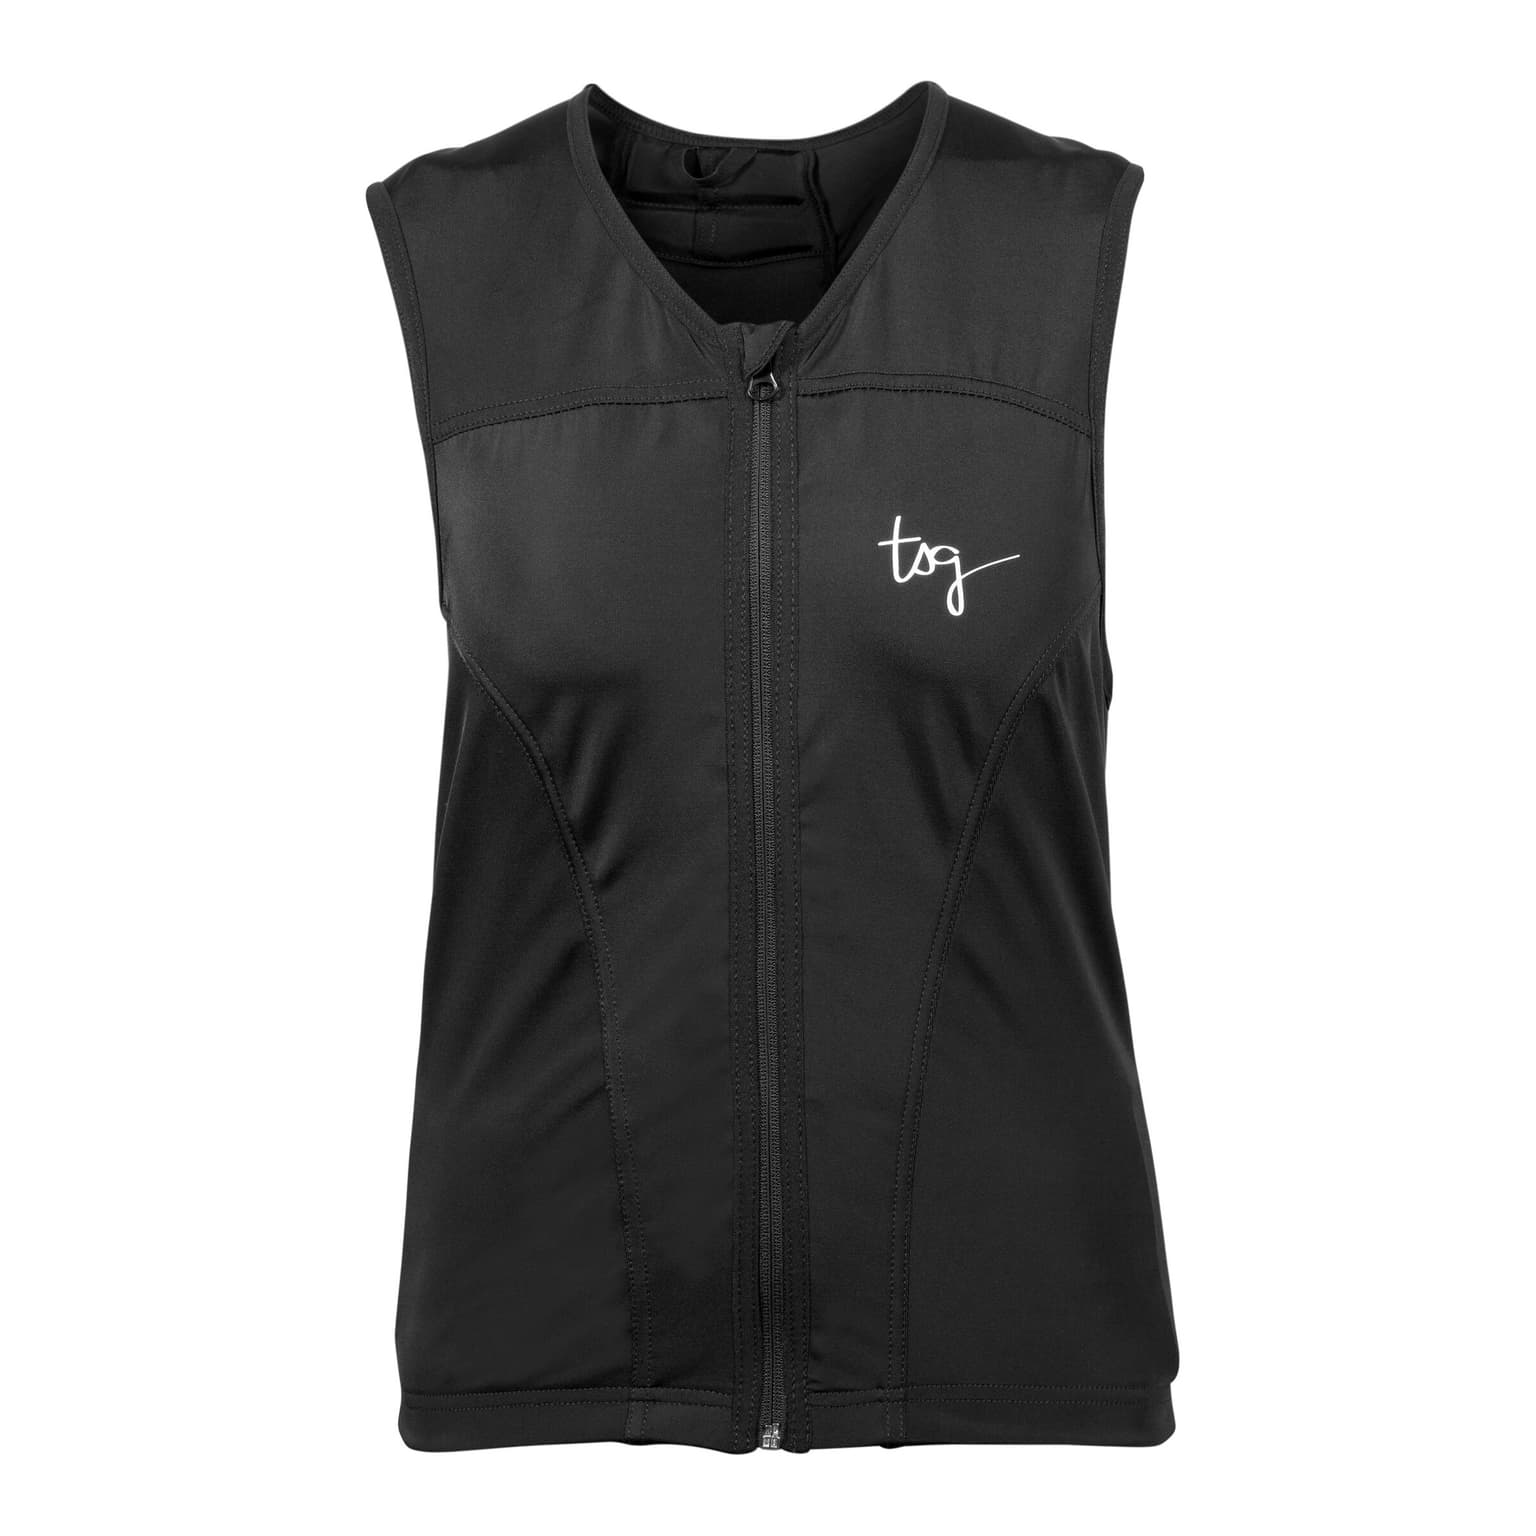 Tsg Tsg Backbone Vest A Protections noir 1